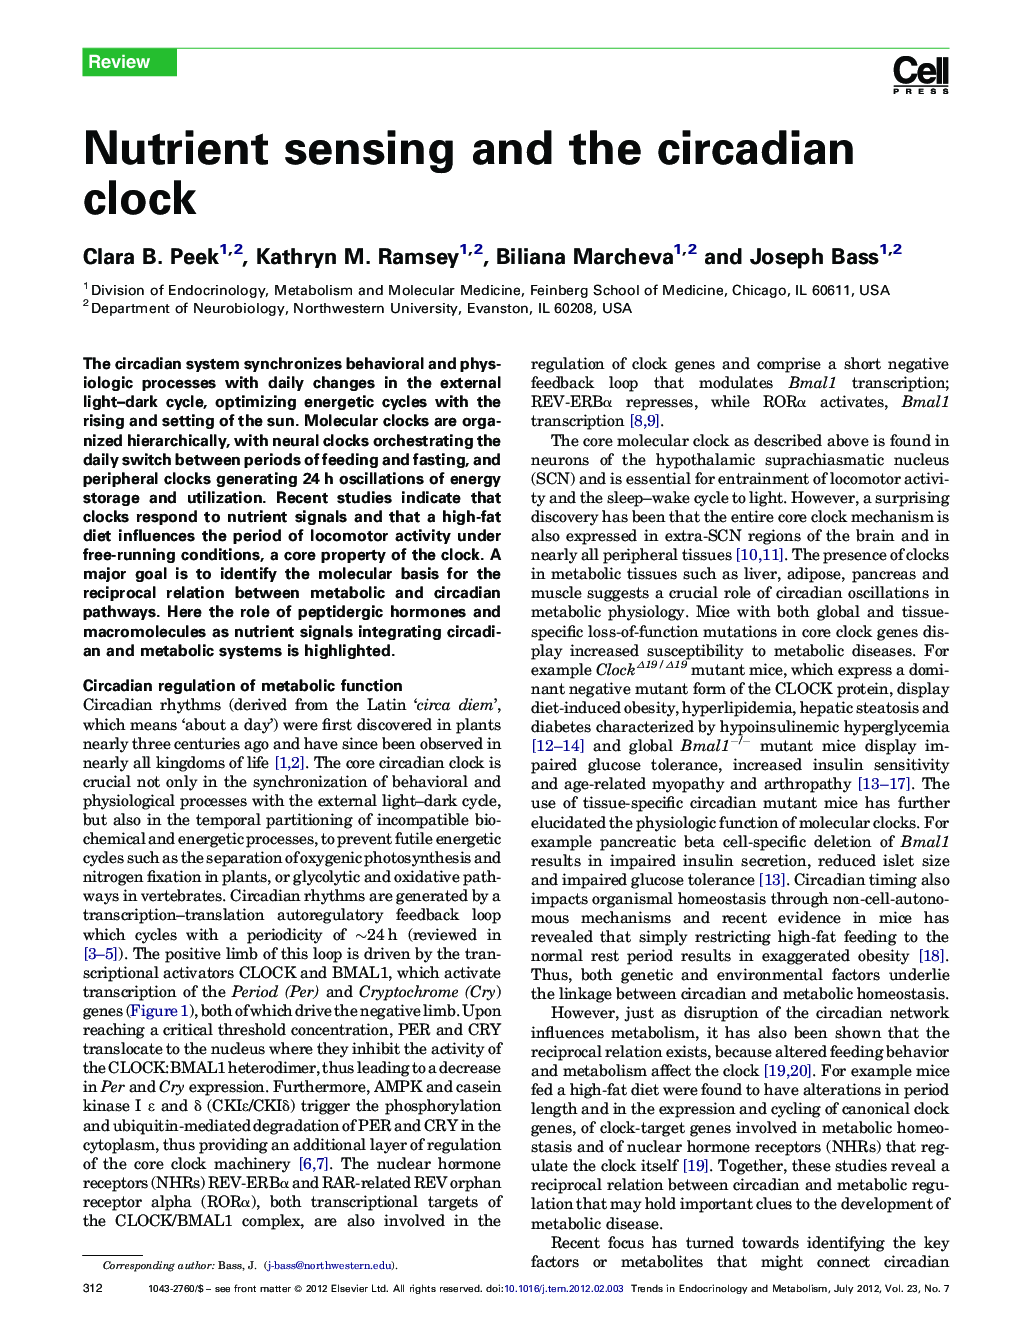 Nutrient sensing and the circadian clock